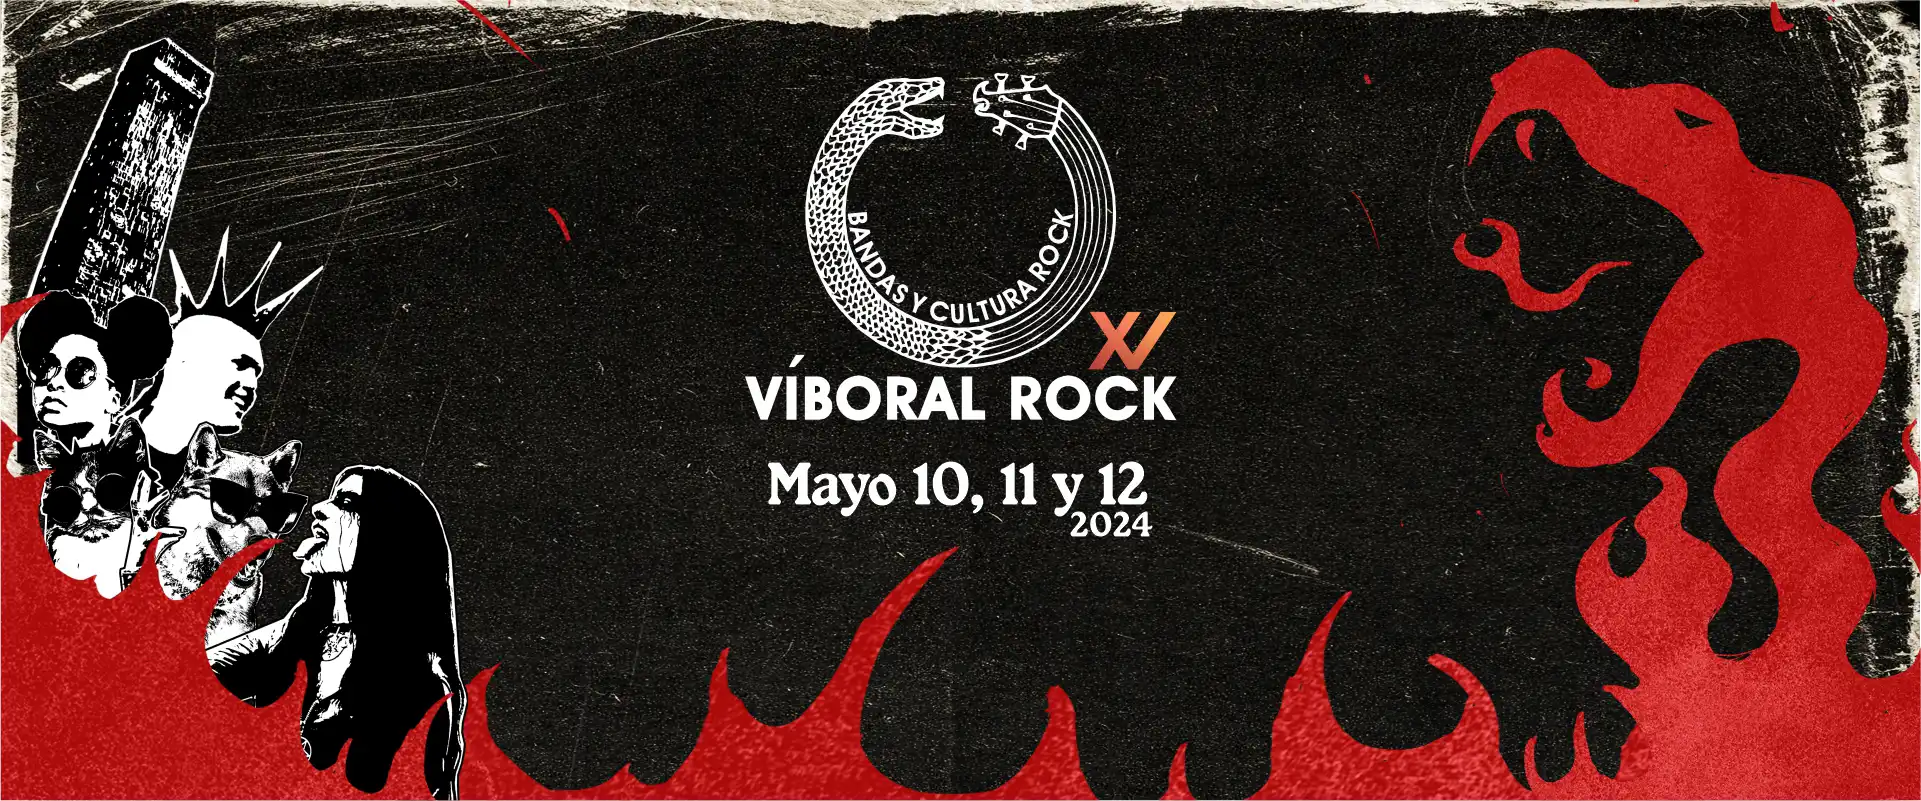 Vibora rock 2024